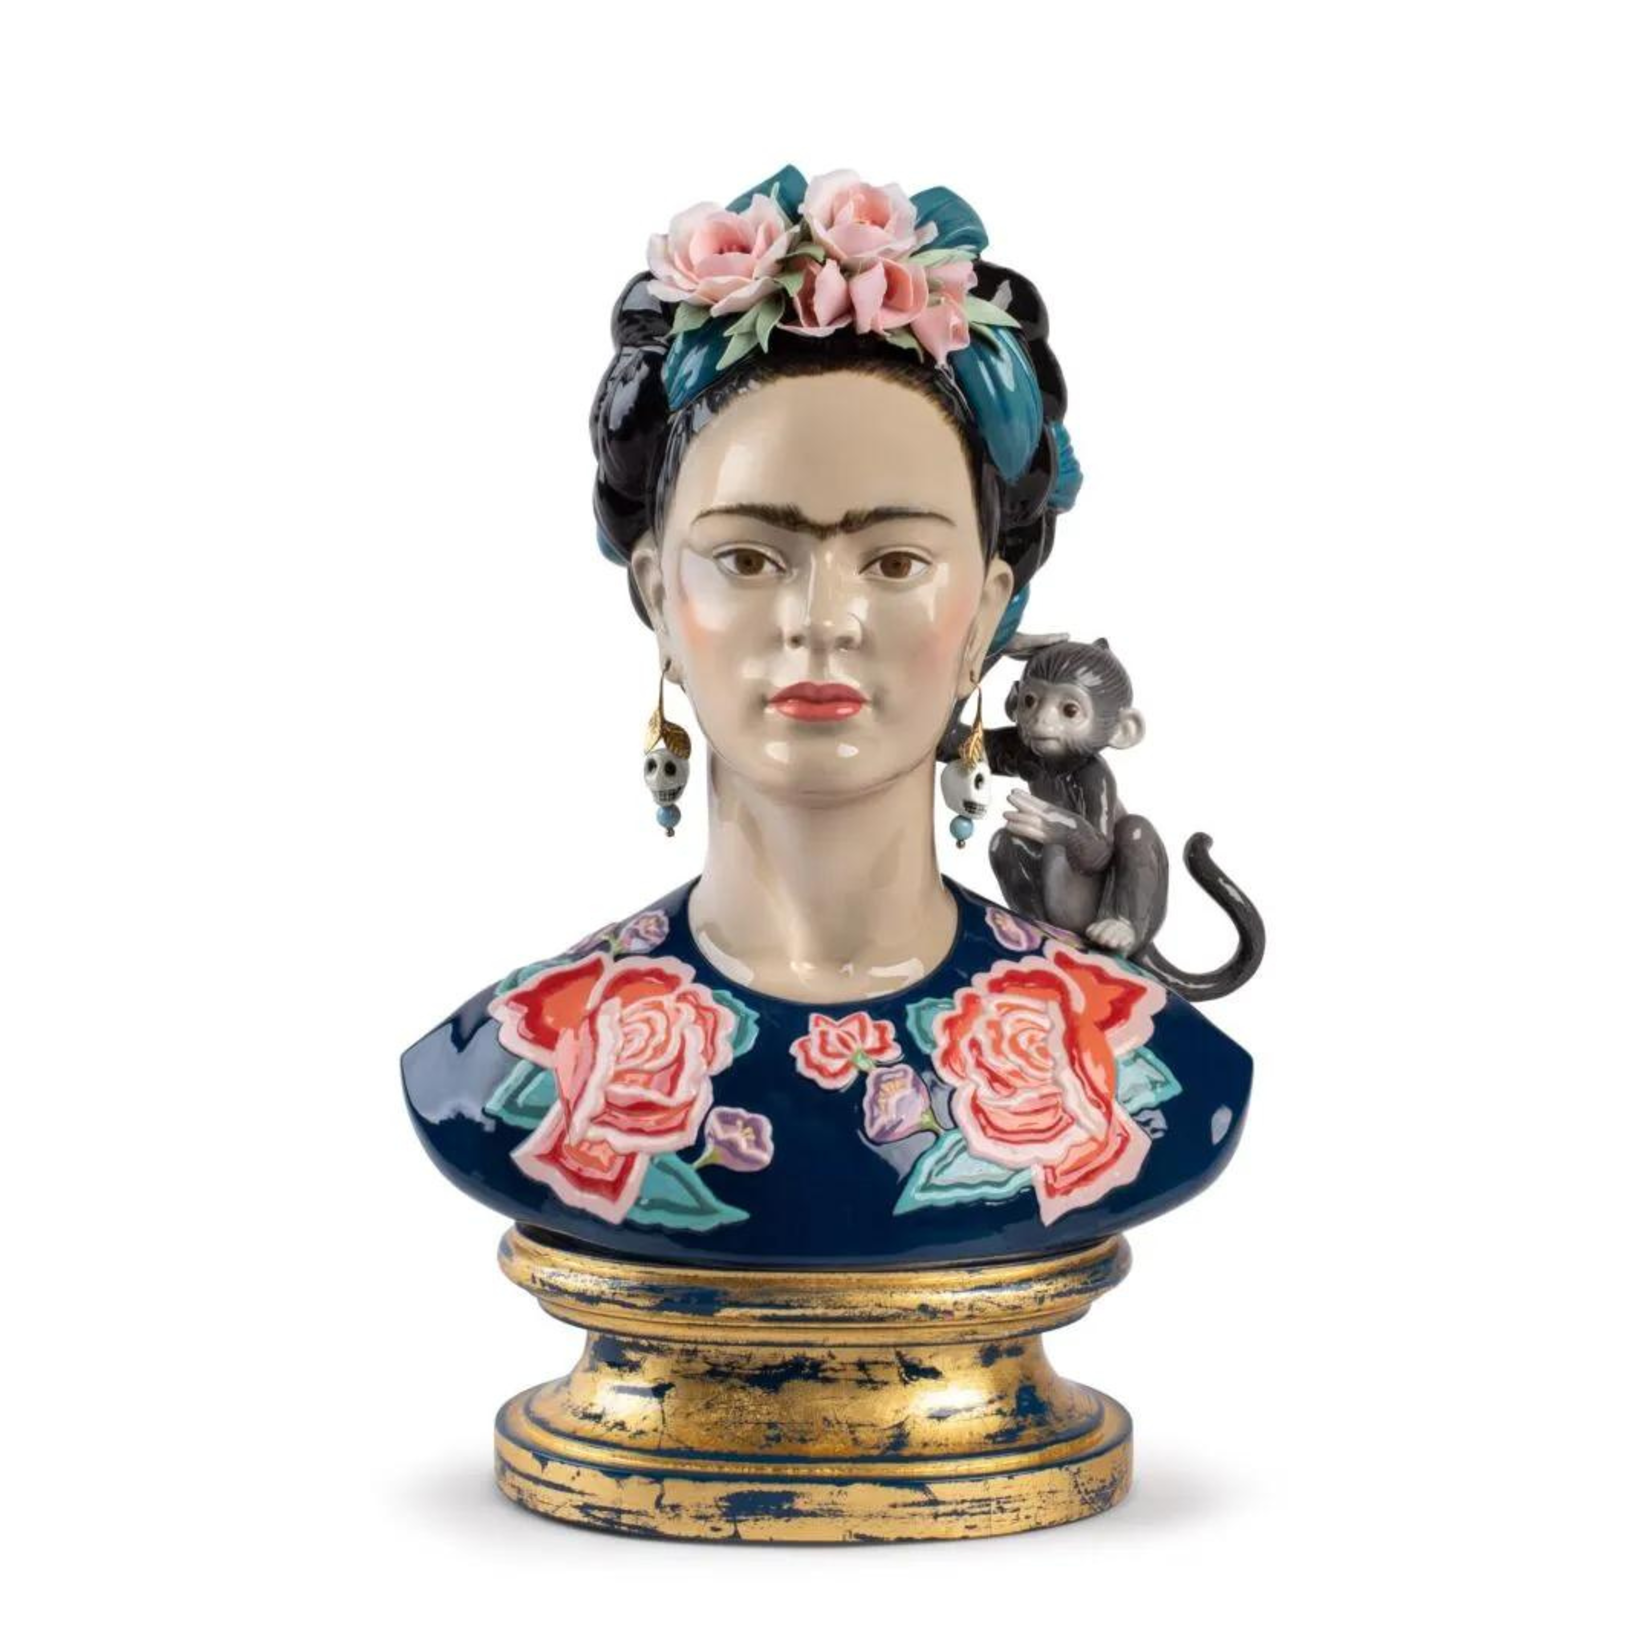 Lladro Frida Kahlo Figurine -Blue -Limited Edition